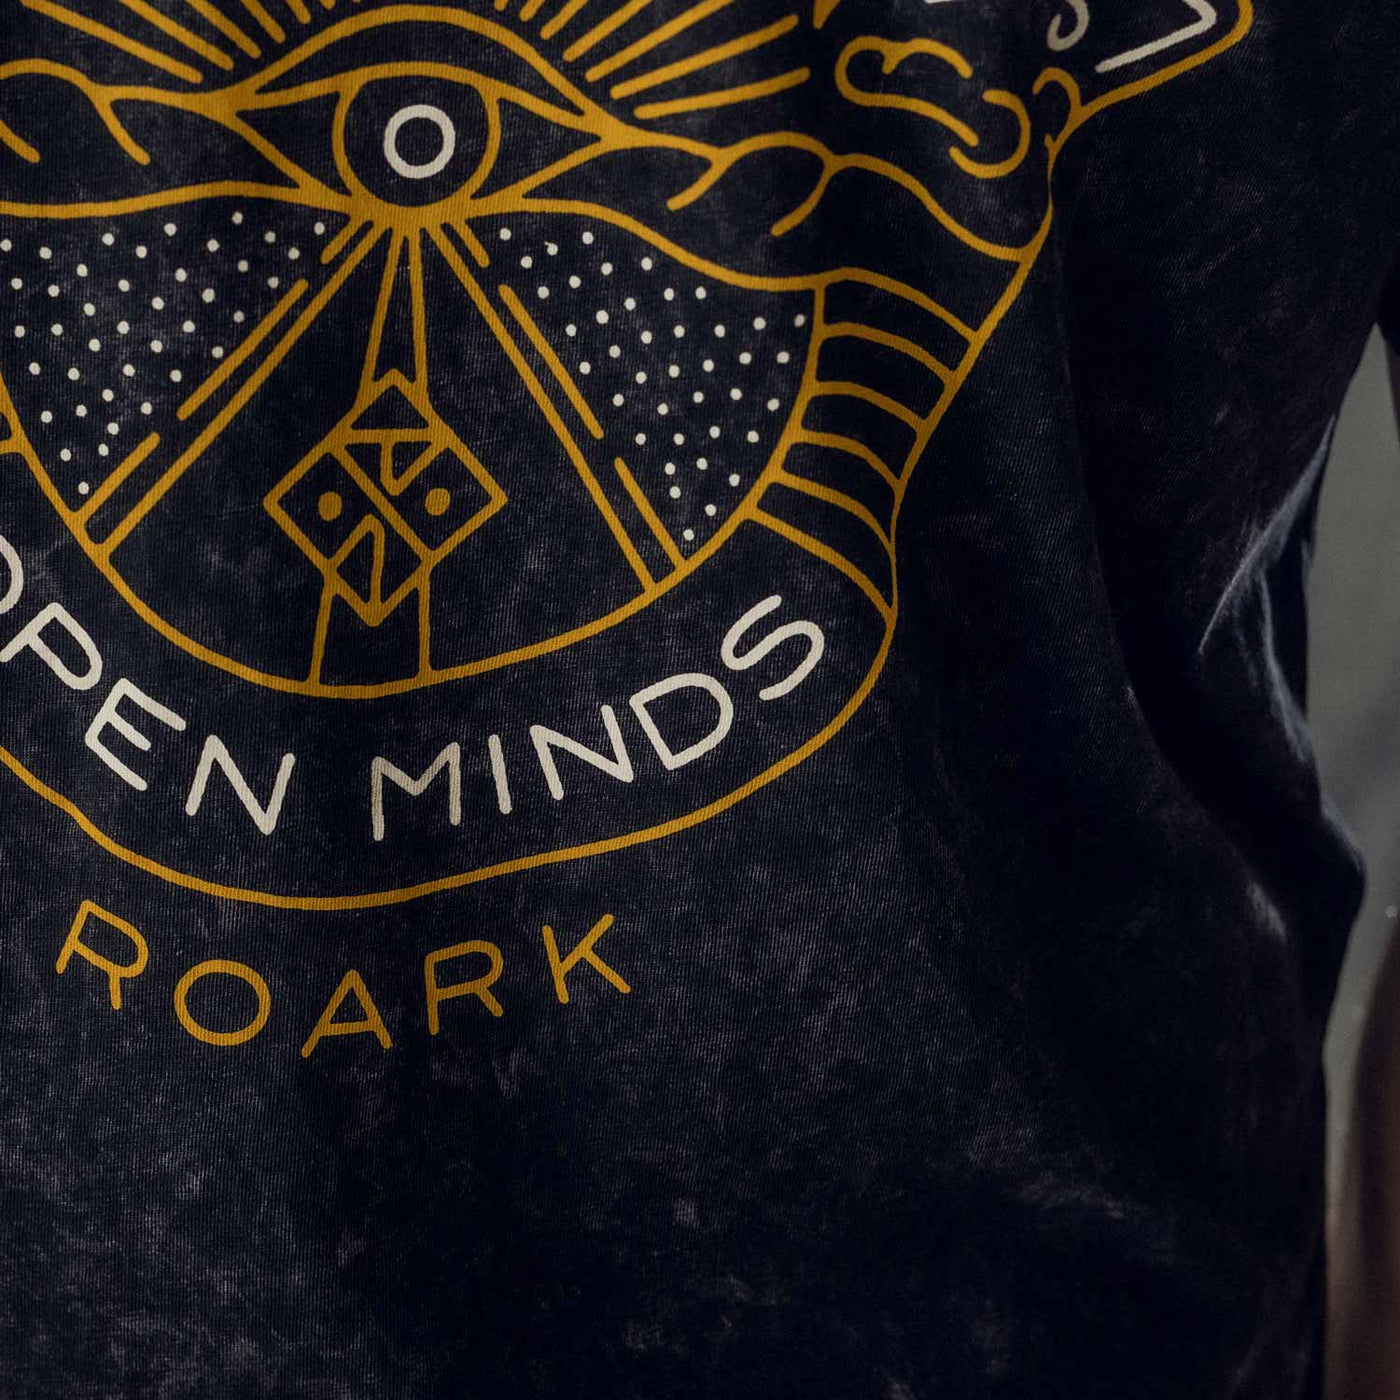 T-shirt - Open roads open minds - black - washed